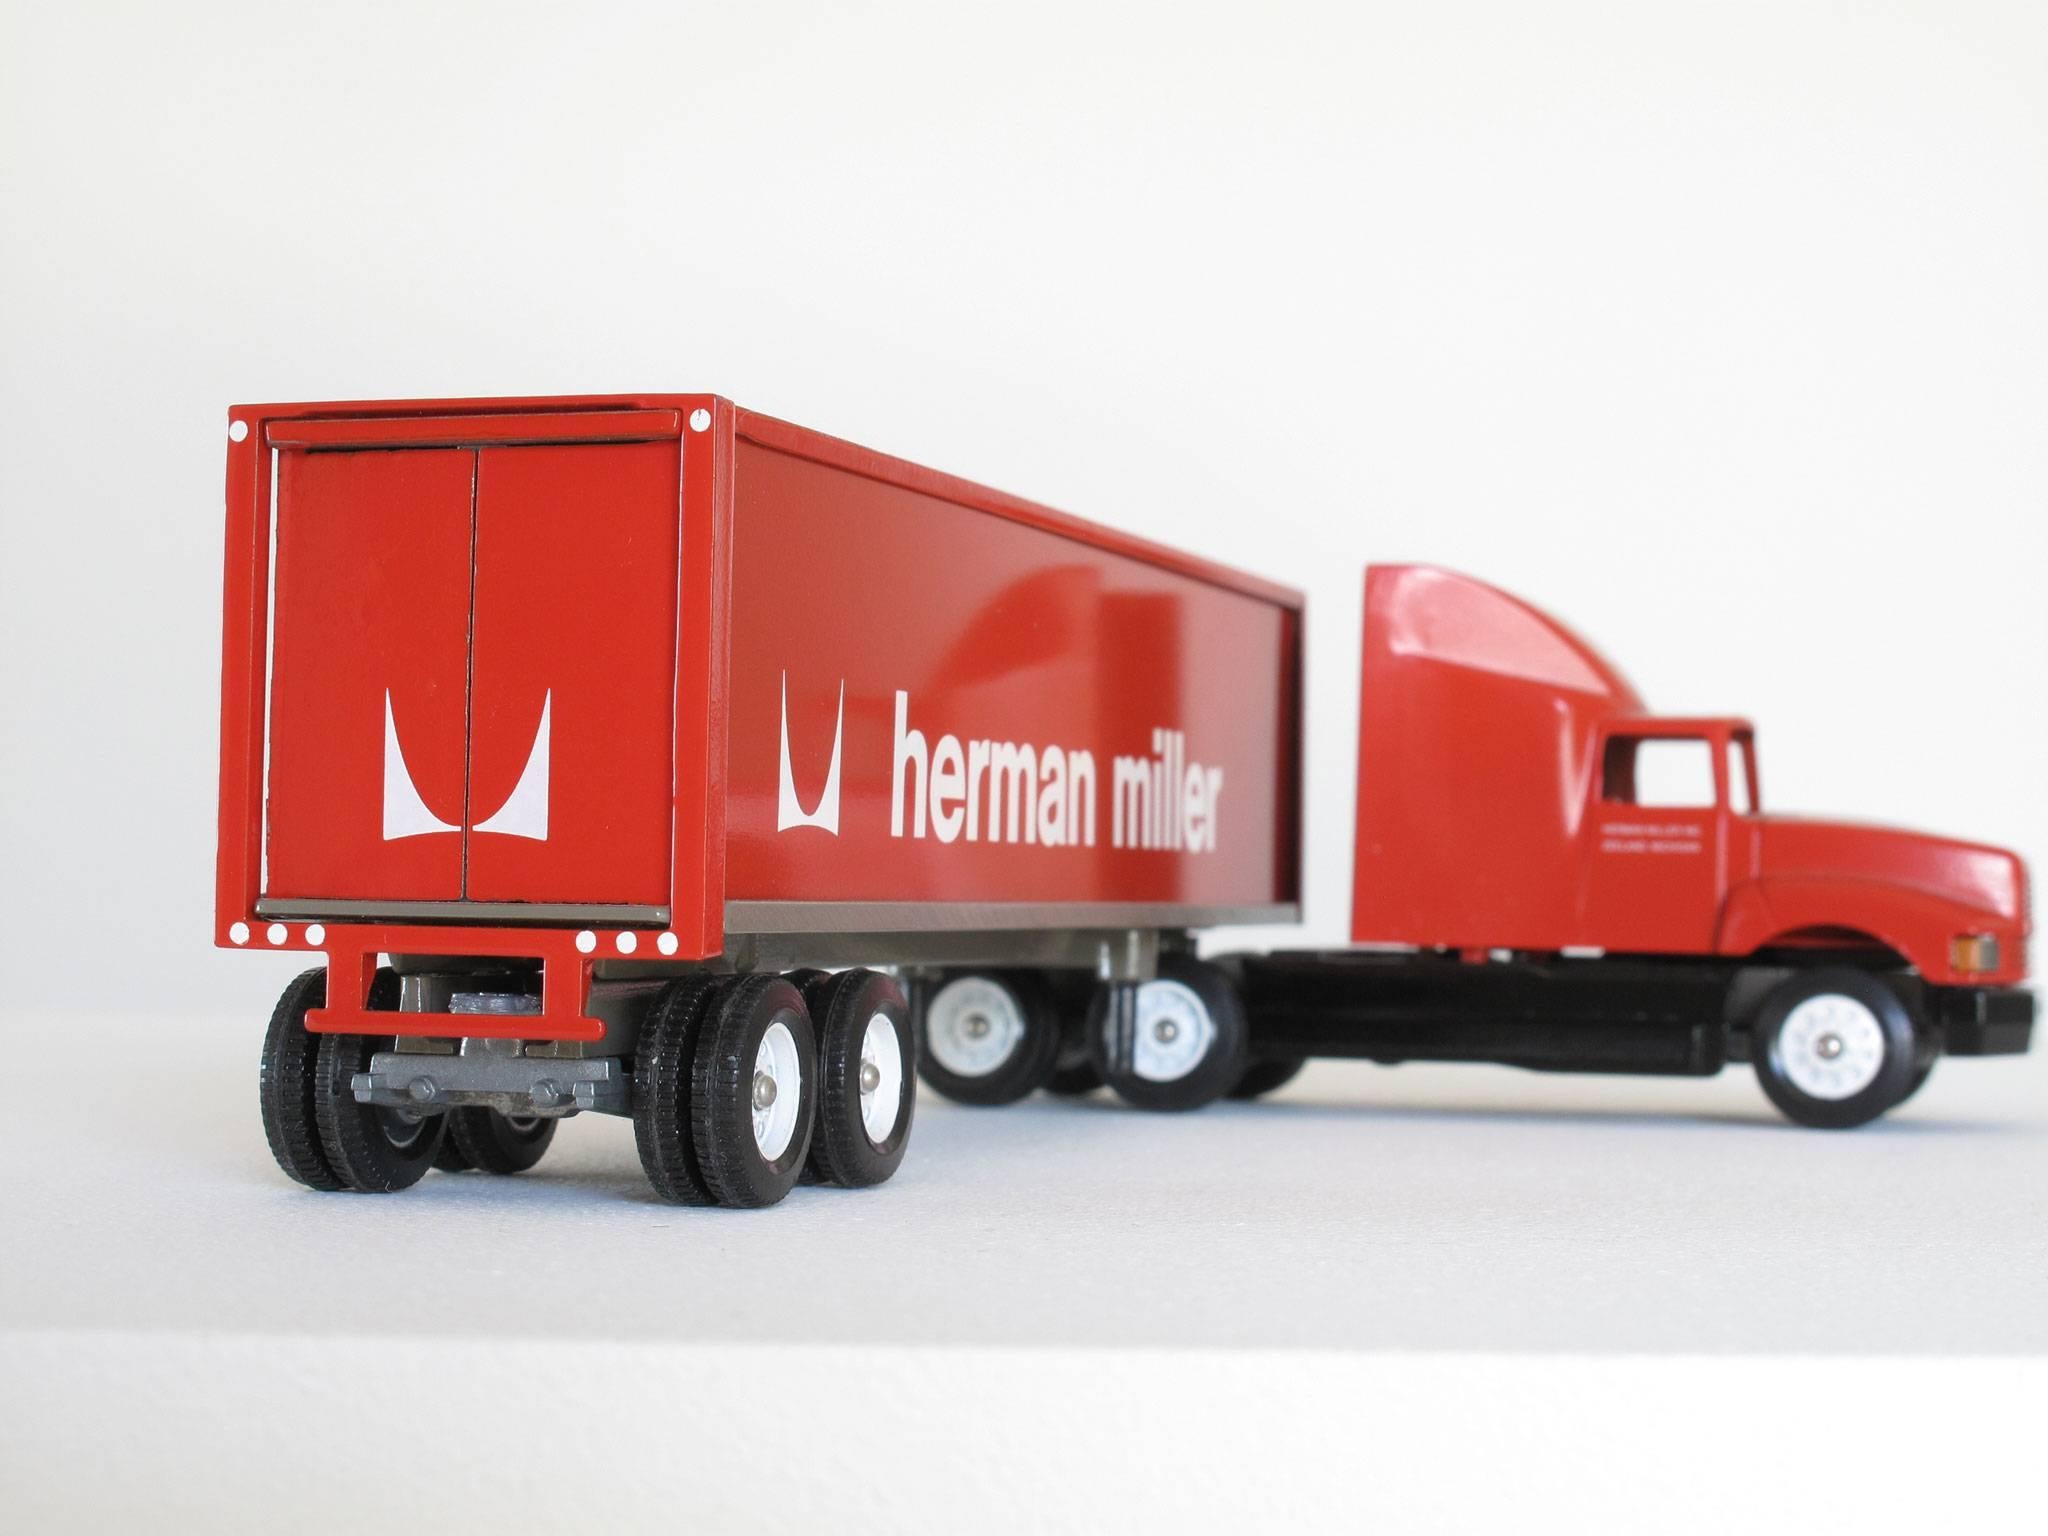 herman miller toy truck